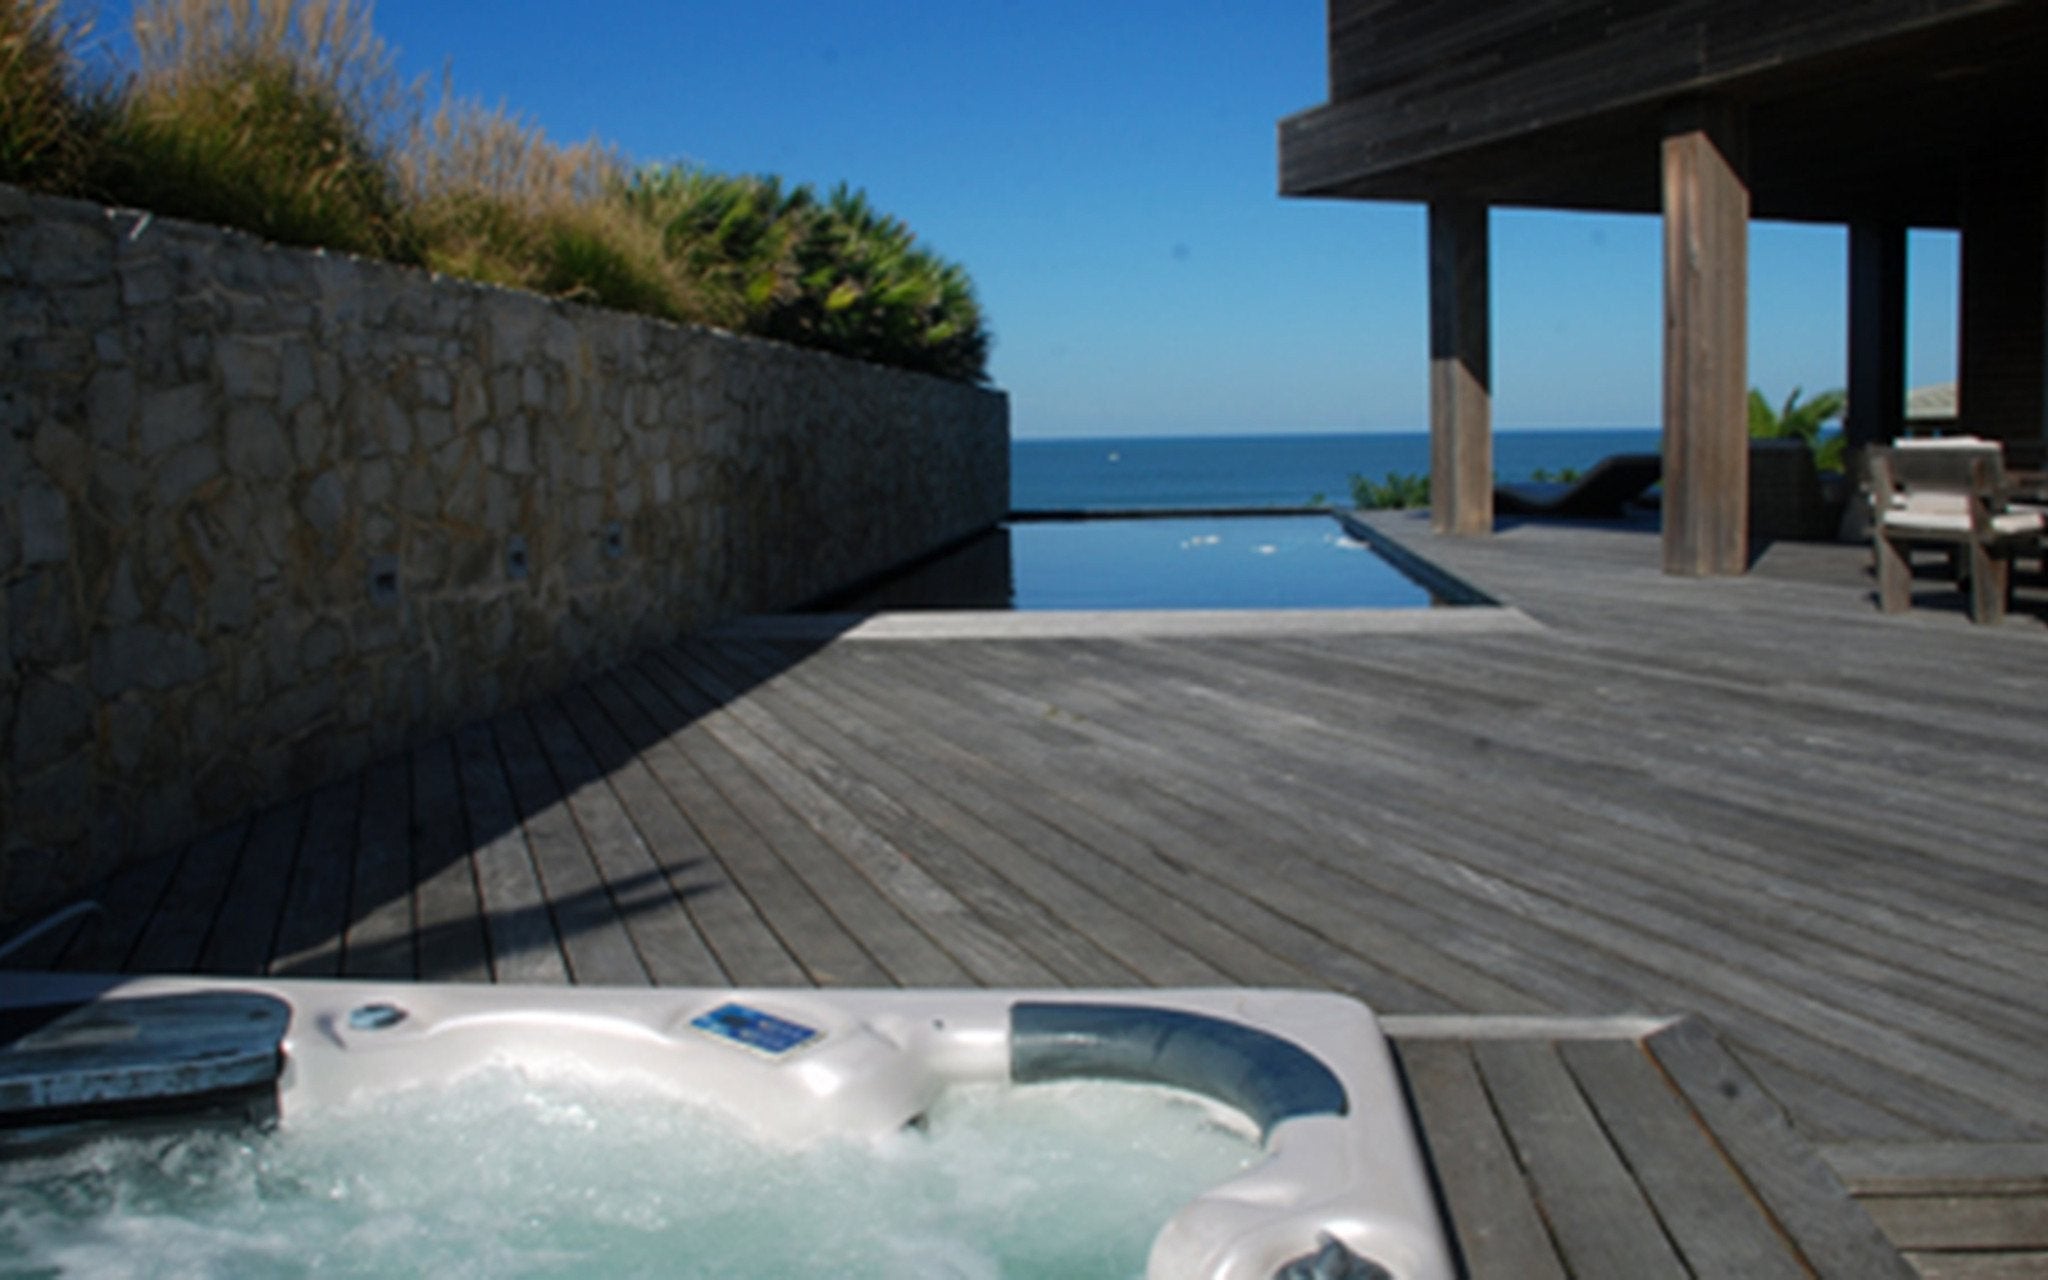 Villa Atlantique, Biarritz Anglet, France - PLAYGROUNDS Costa Rica Yacht Rental, Luxury Ocean Adventures